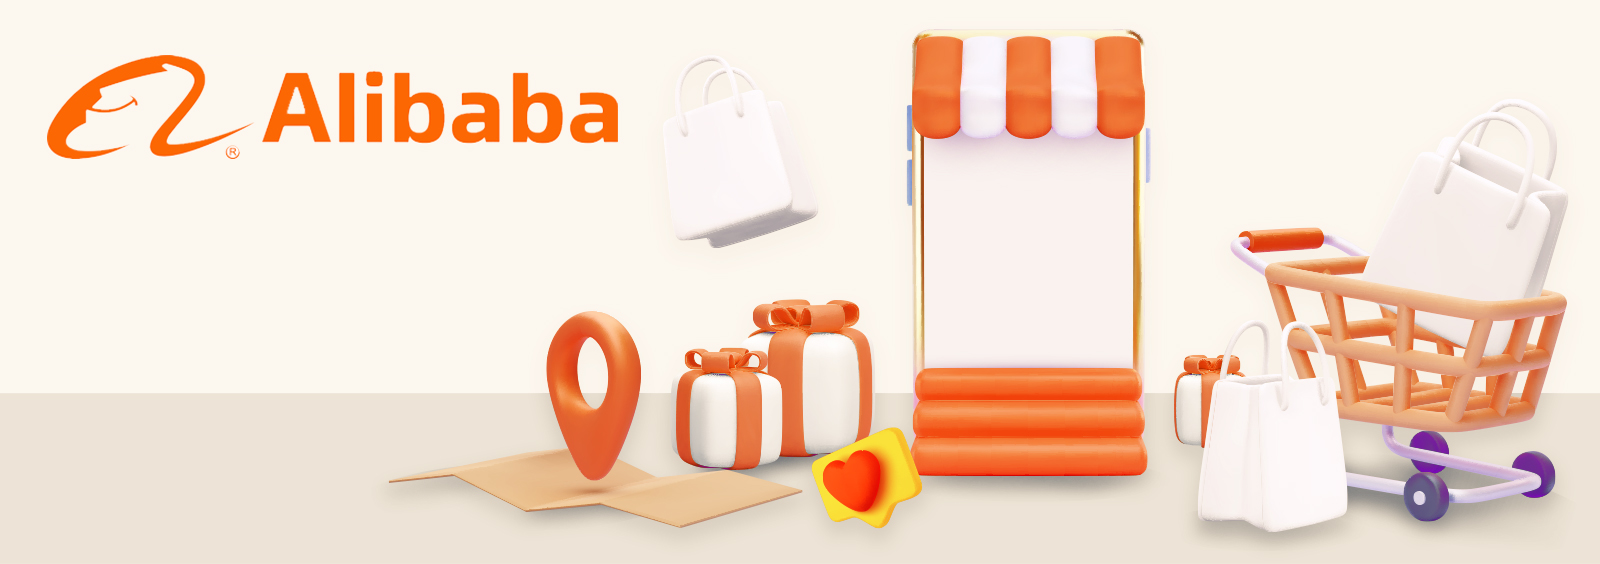 Alibaba - Alibaba